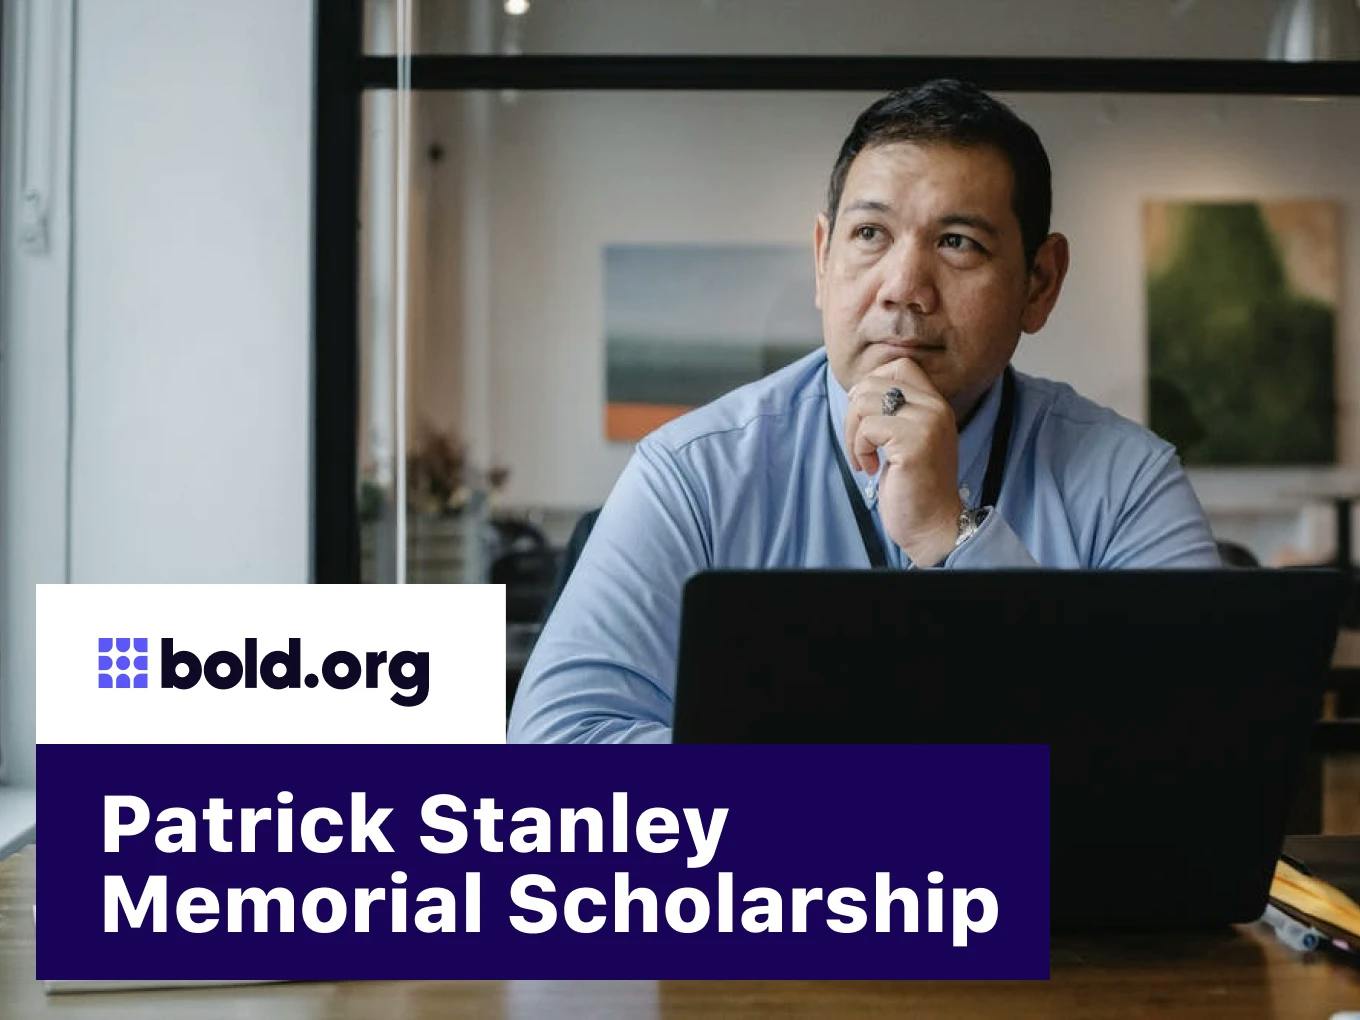 Patrick Stanley Memorial Scholarship